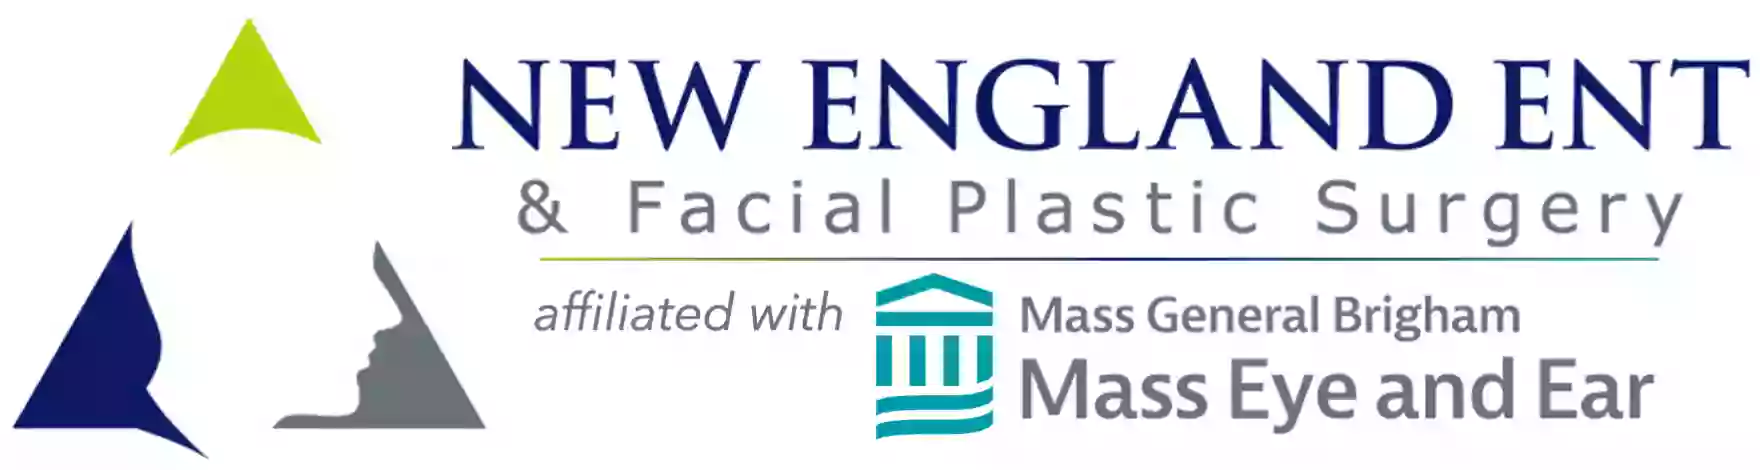 New England ENT & Facial Plastic Surgery